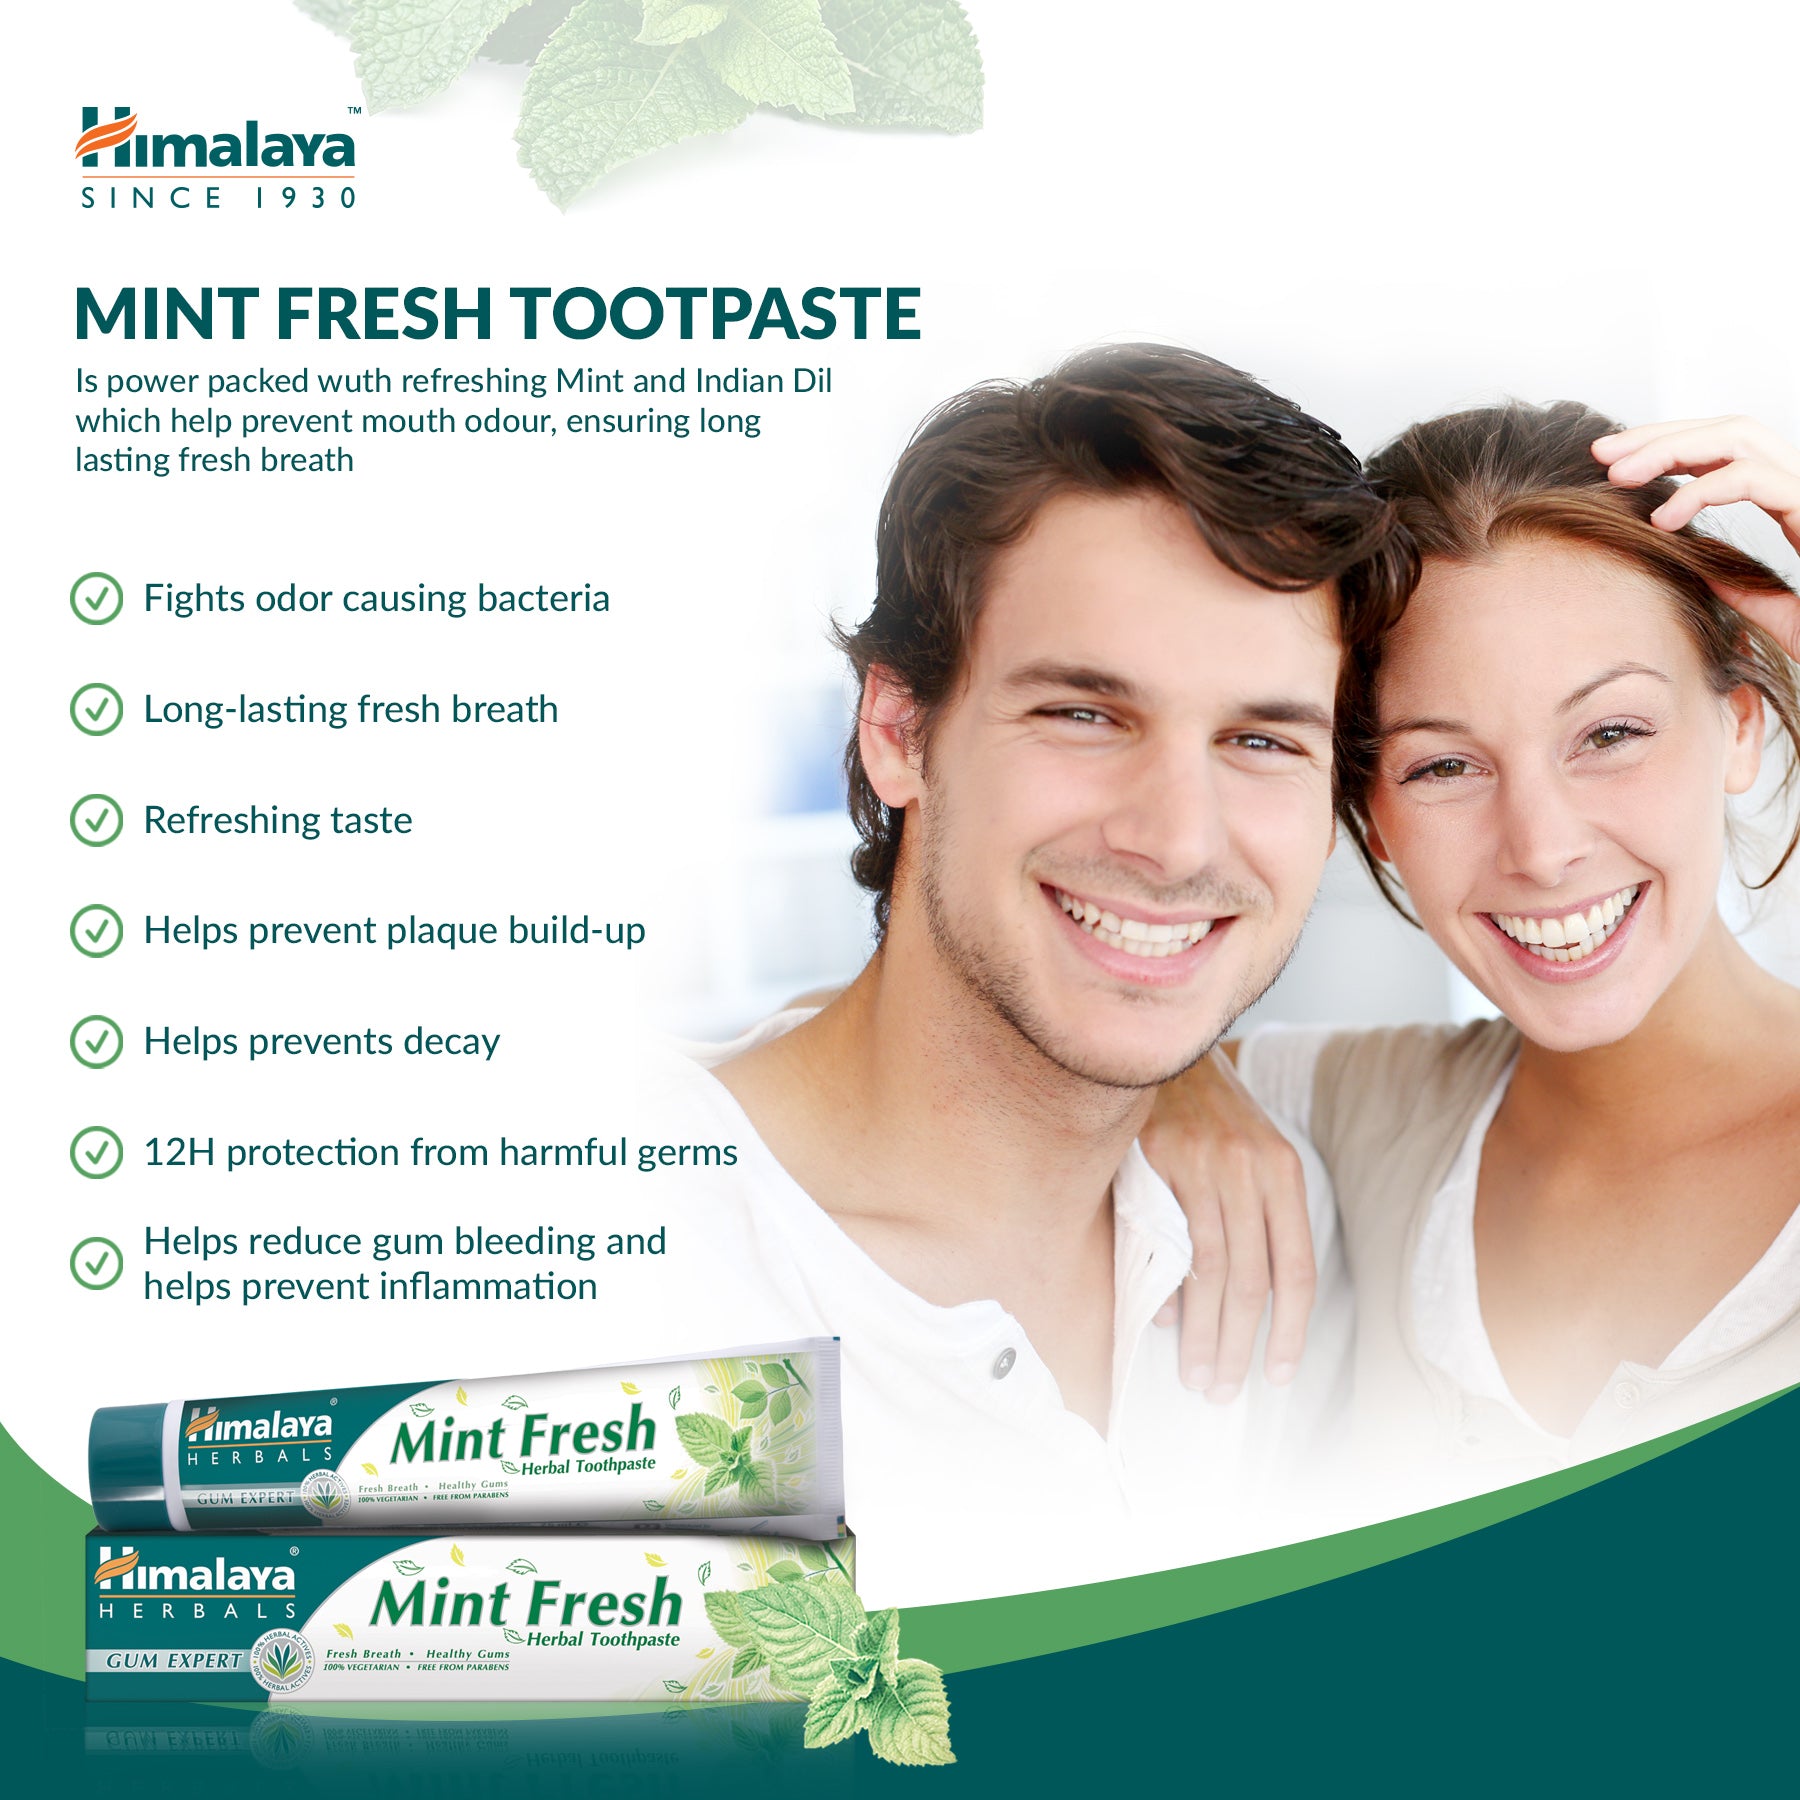 Himalaya Gum Expert Herbal Toothpaste - Mint Fresh - 75ml